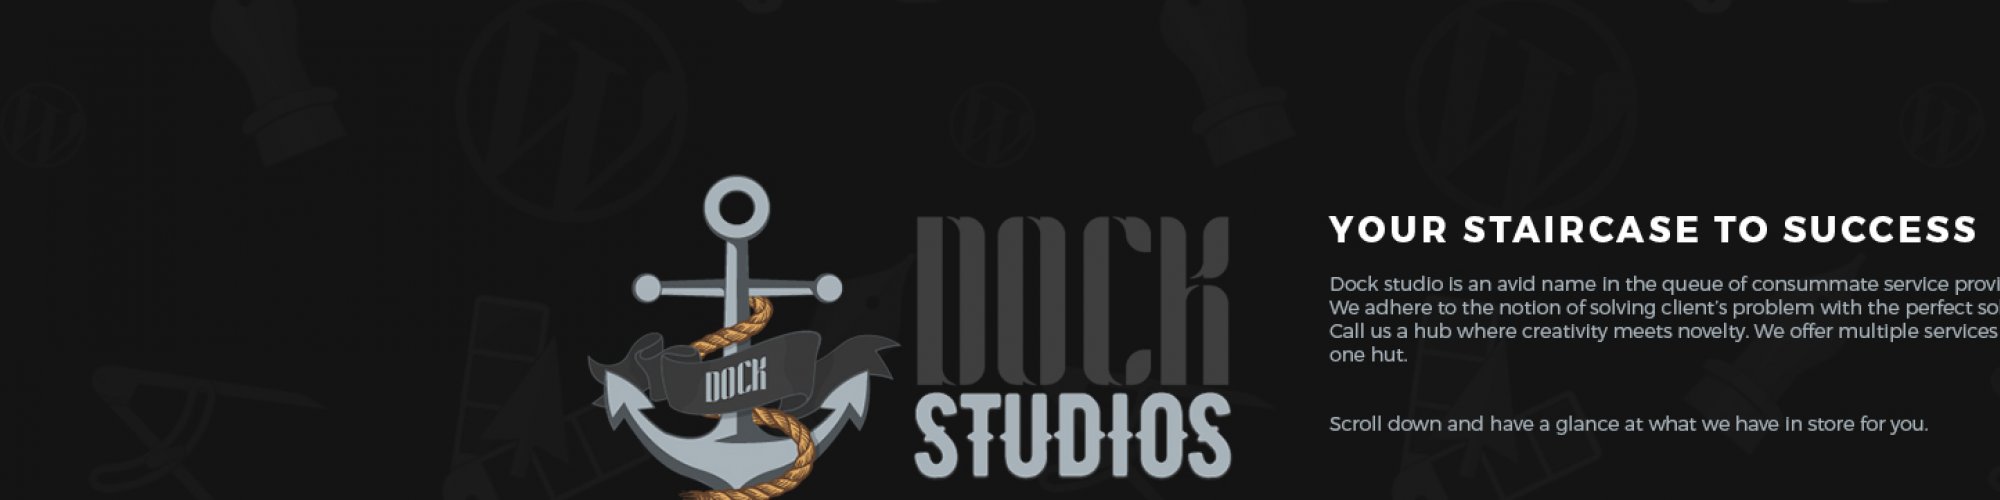 Dock Studios - Digital Agency USA